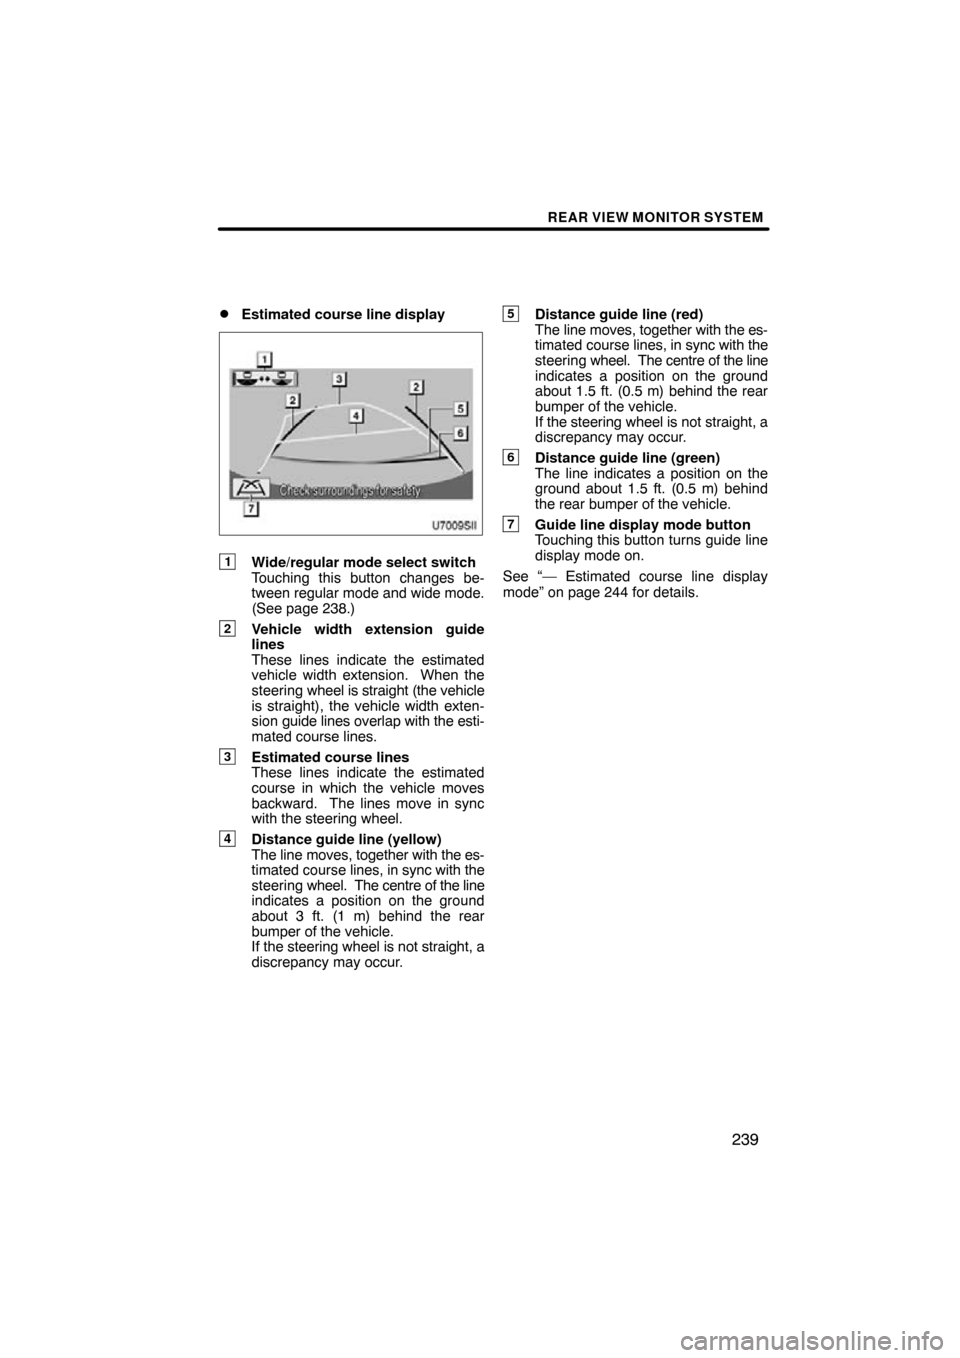 TOYOTA SIENNA 2014 XL30 / 3.G Navigation Manual REAR VIEW MONITOR SYSTEM
239

Estimated course line display
1Wide/regular mode select switch
Touching this button changes be-
tween regular mode and wide mode.
(See page 238.)
2Vehicle width extensio